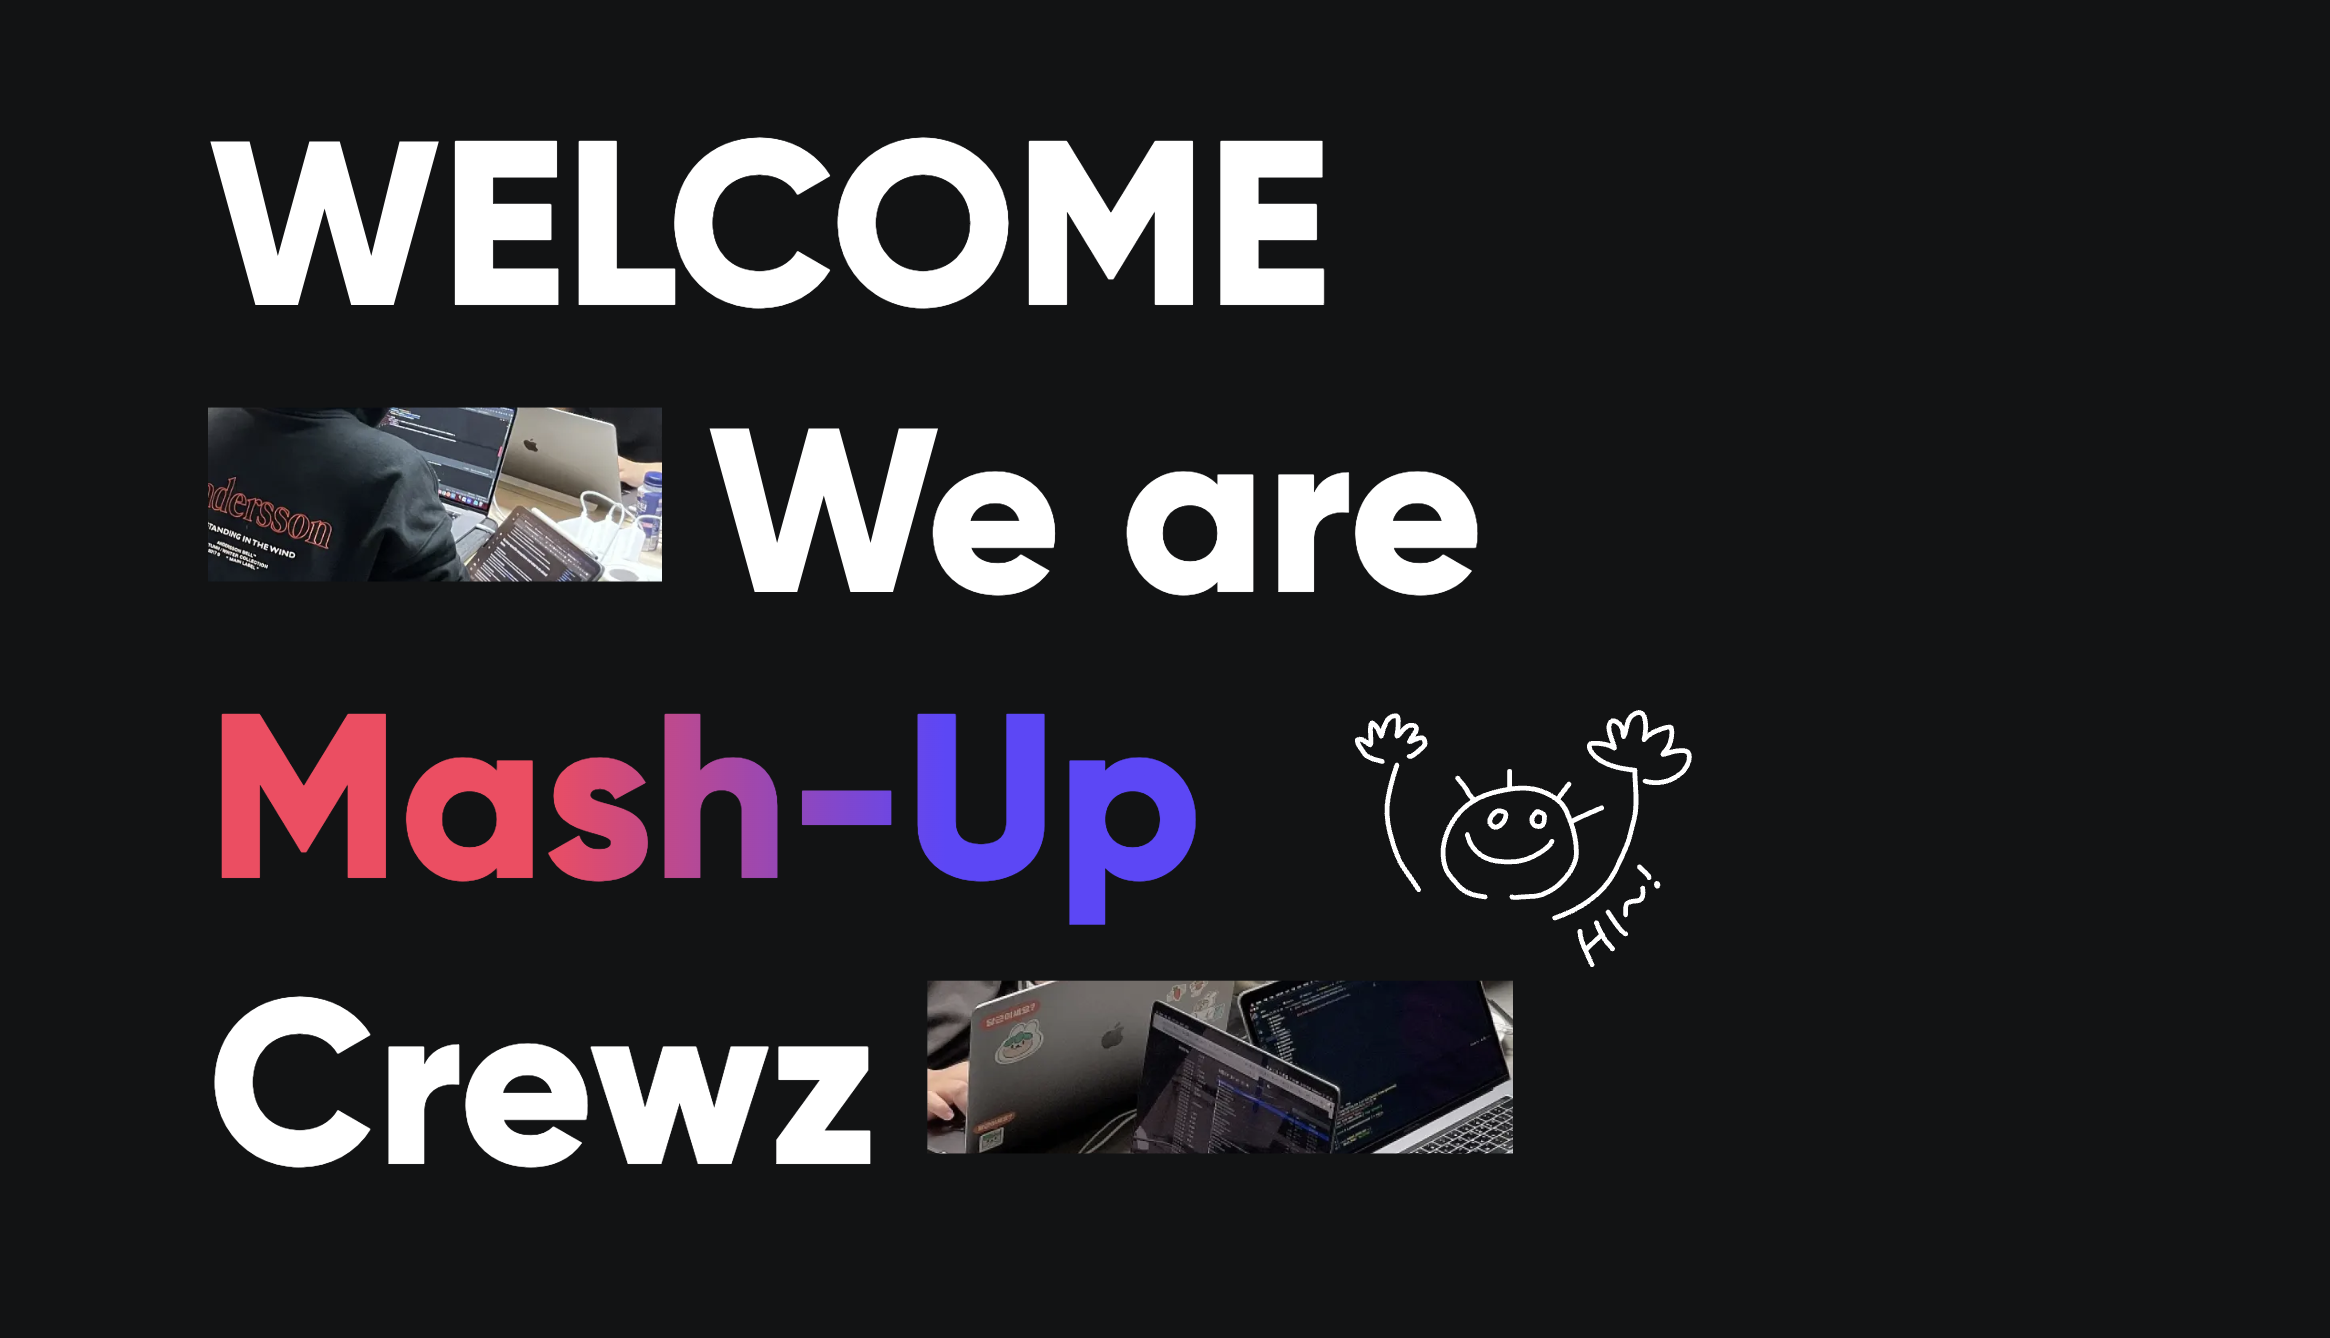 Welcome We are Mash-Up Crewz